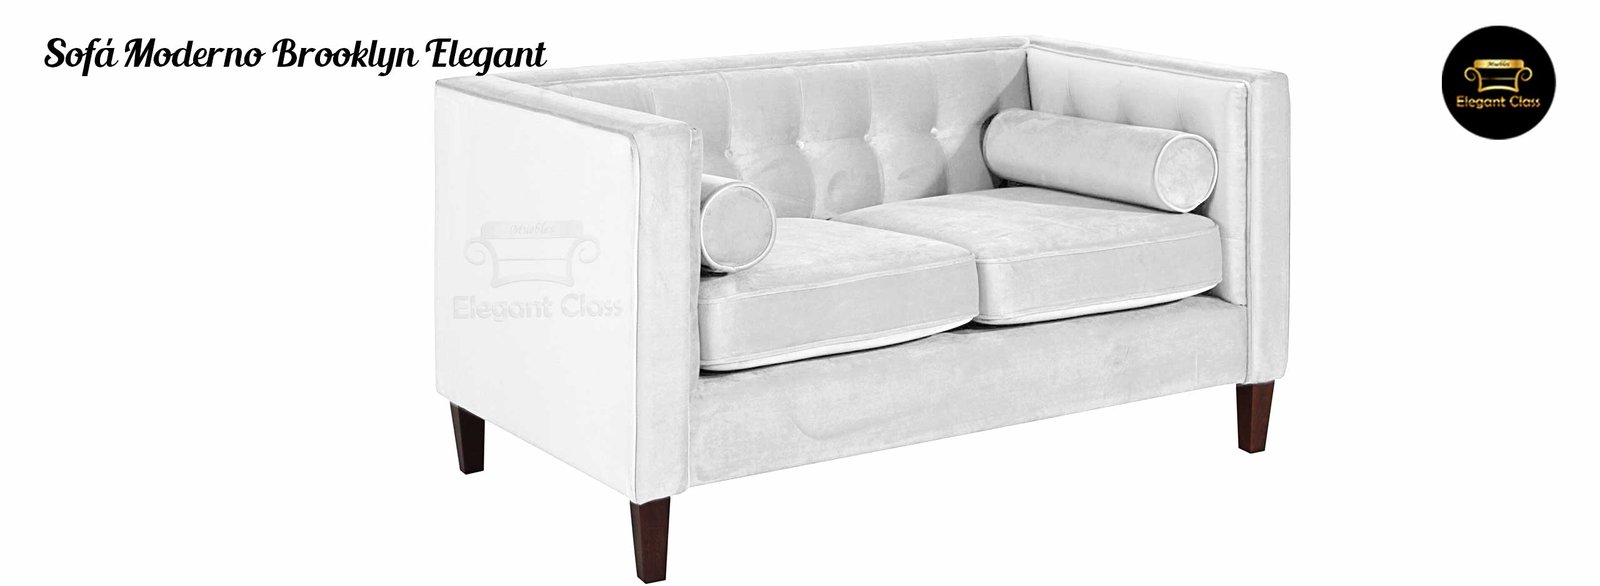 Sillón Elegant blanco marfil – Muebles Inac